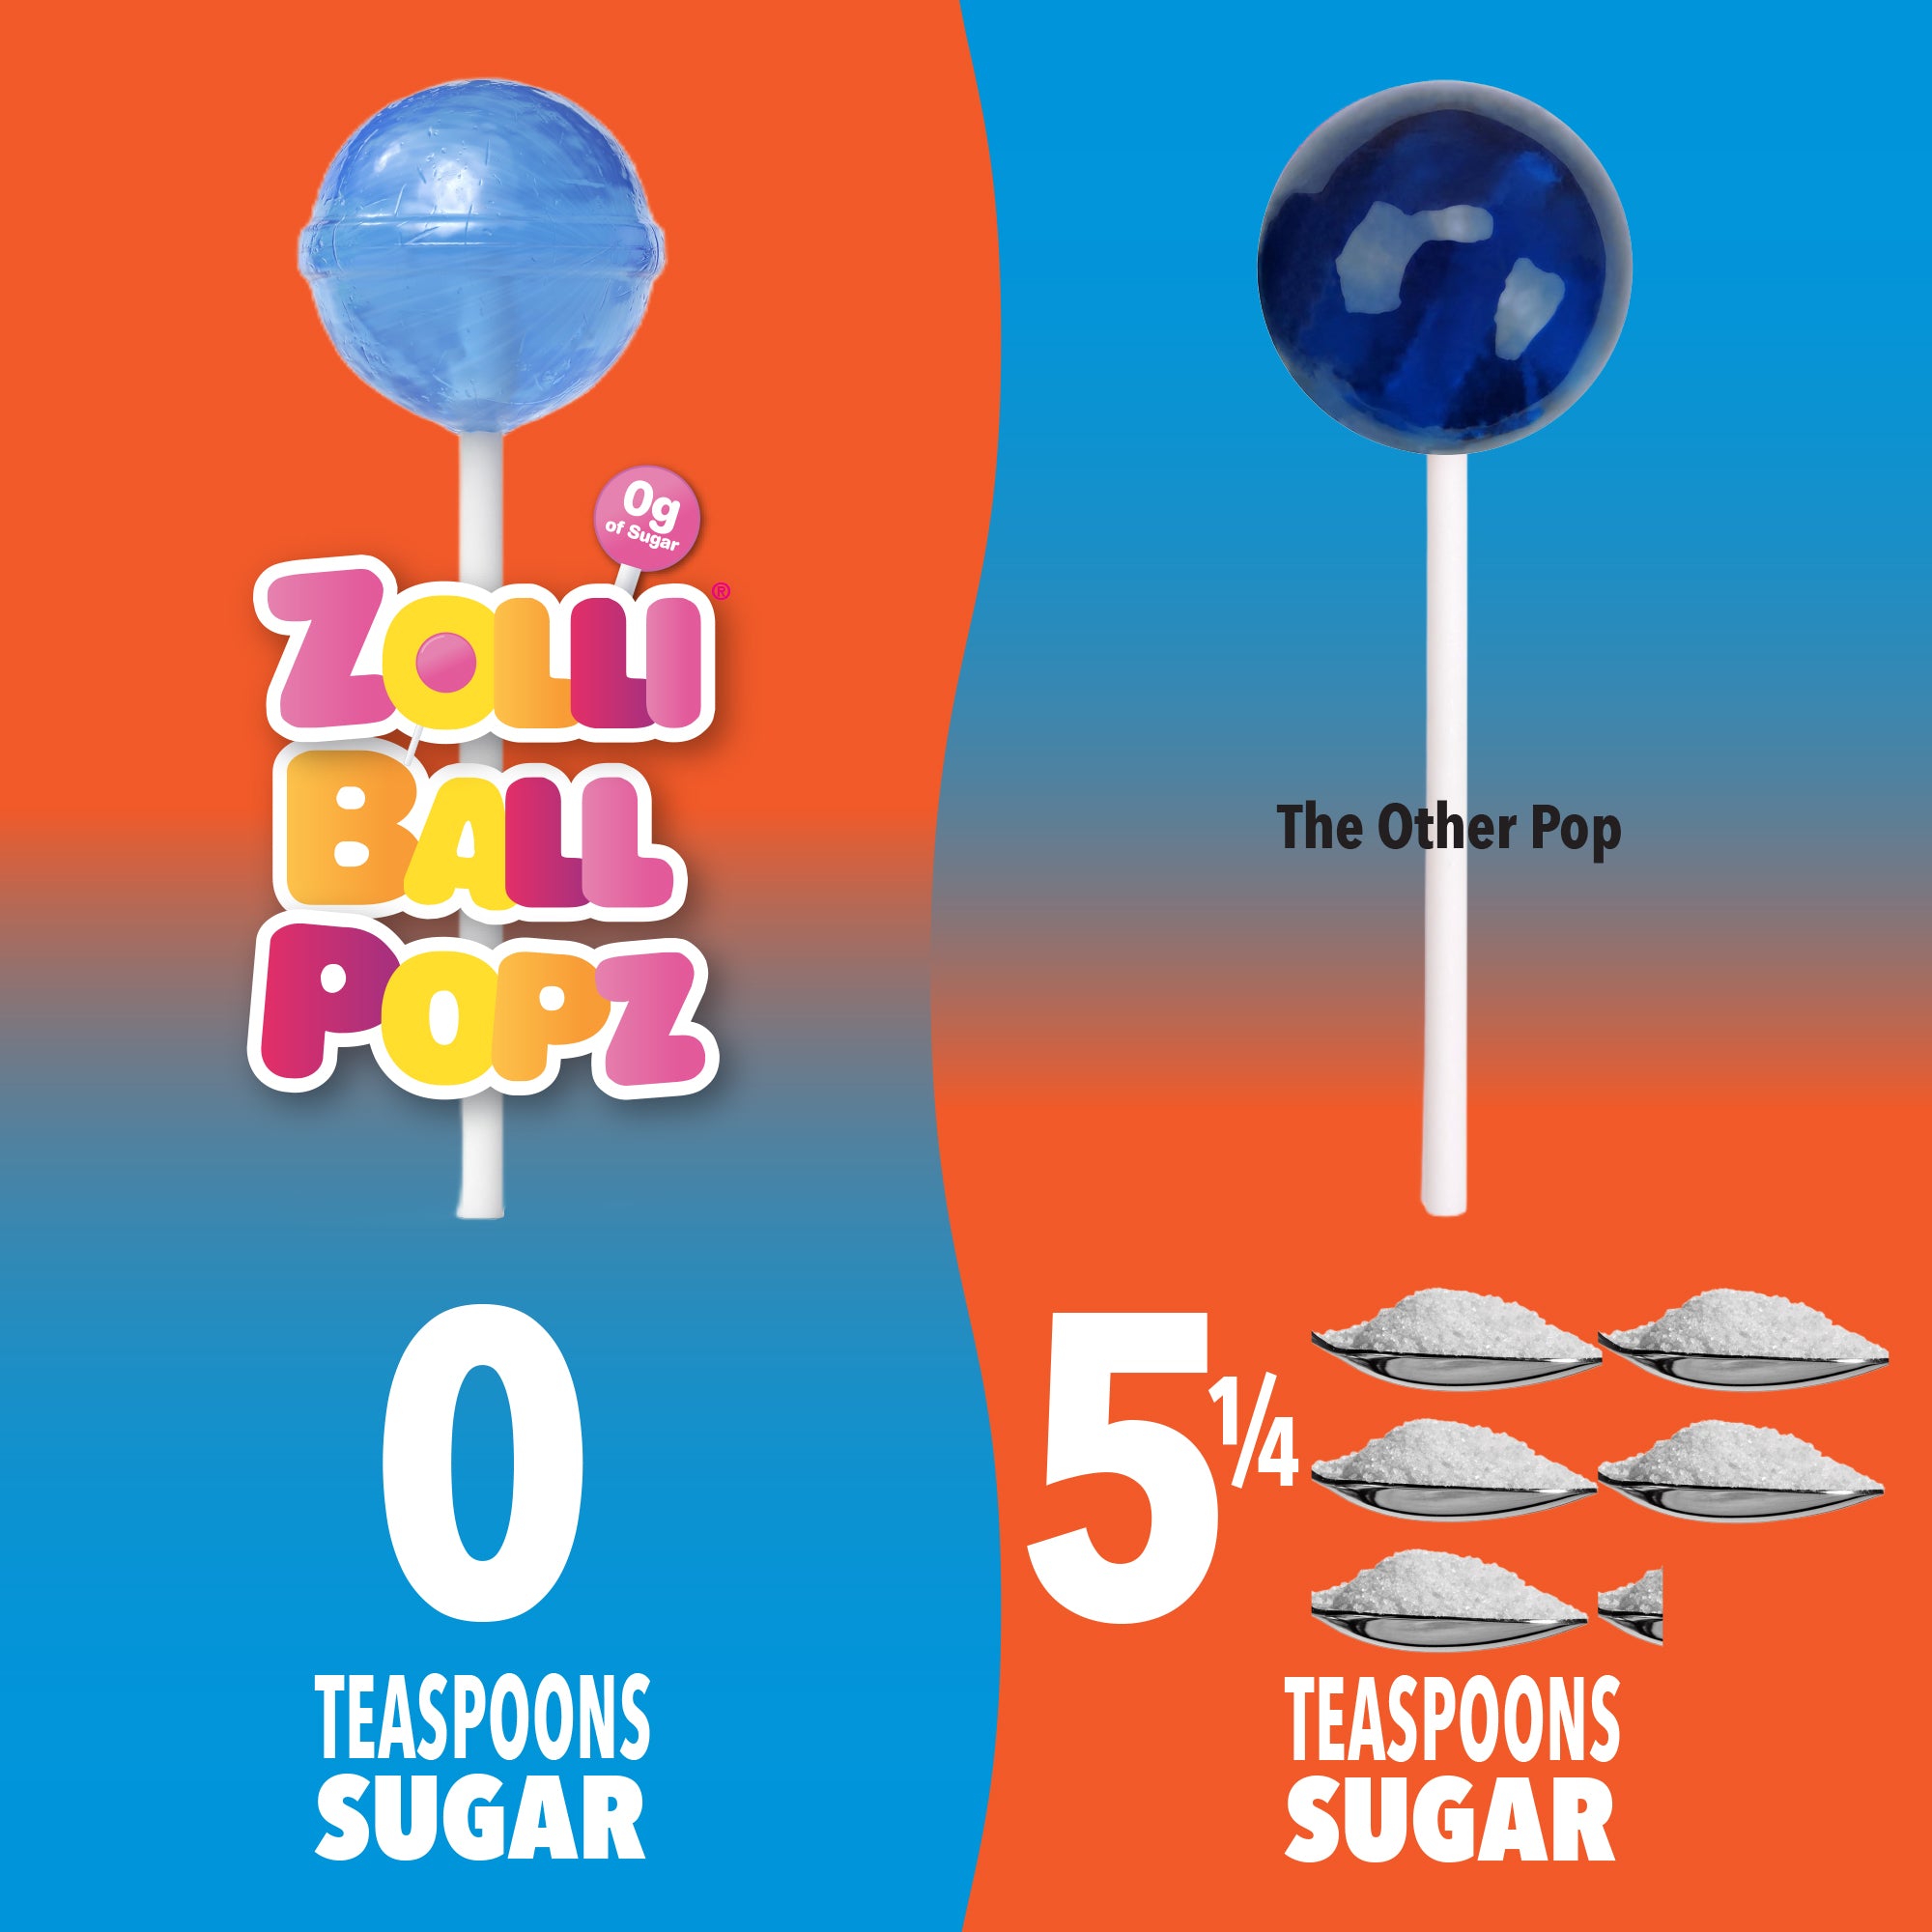 Zolli Ball Popz have 0 teaspoons of sugar. Competing ball pop lollipops have 5.25 teaspoons of sugar.